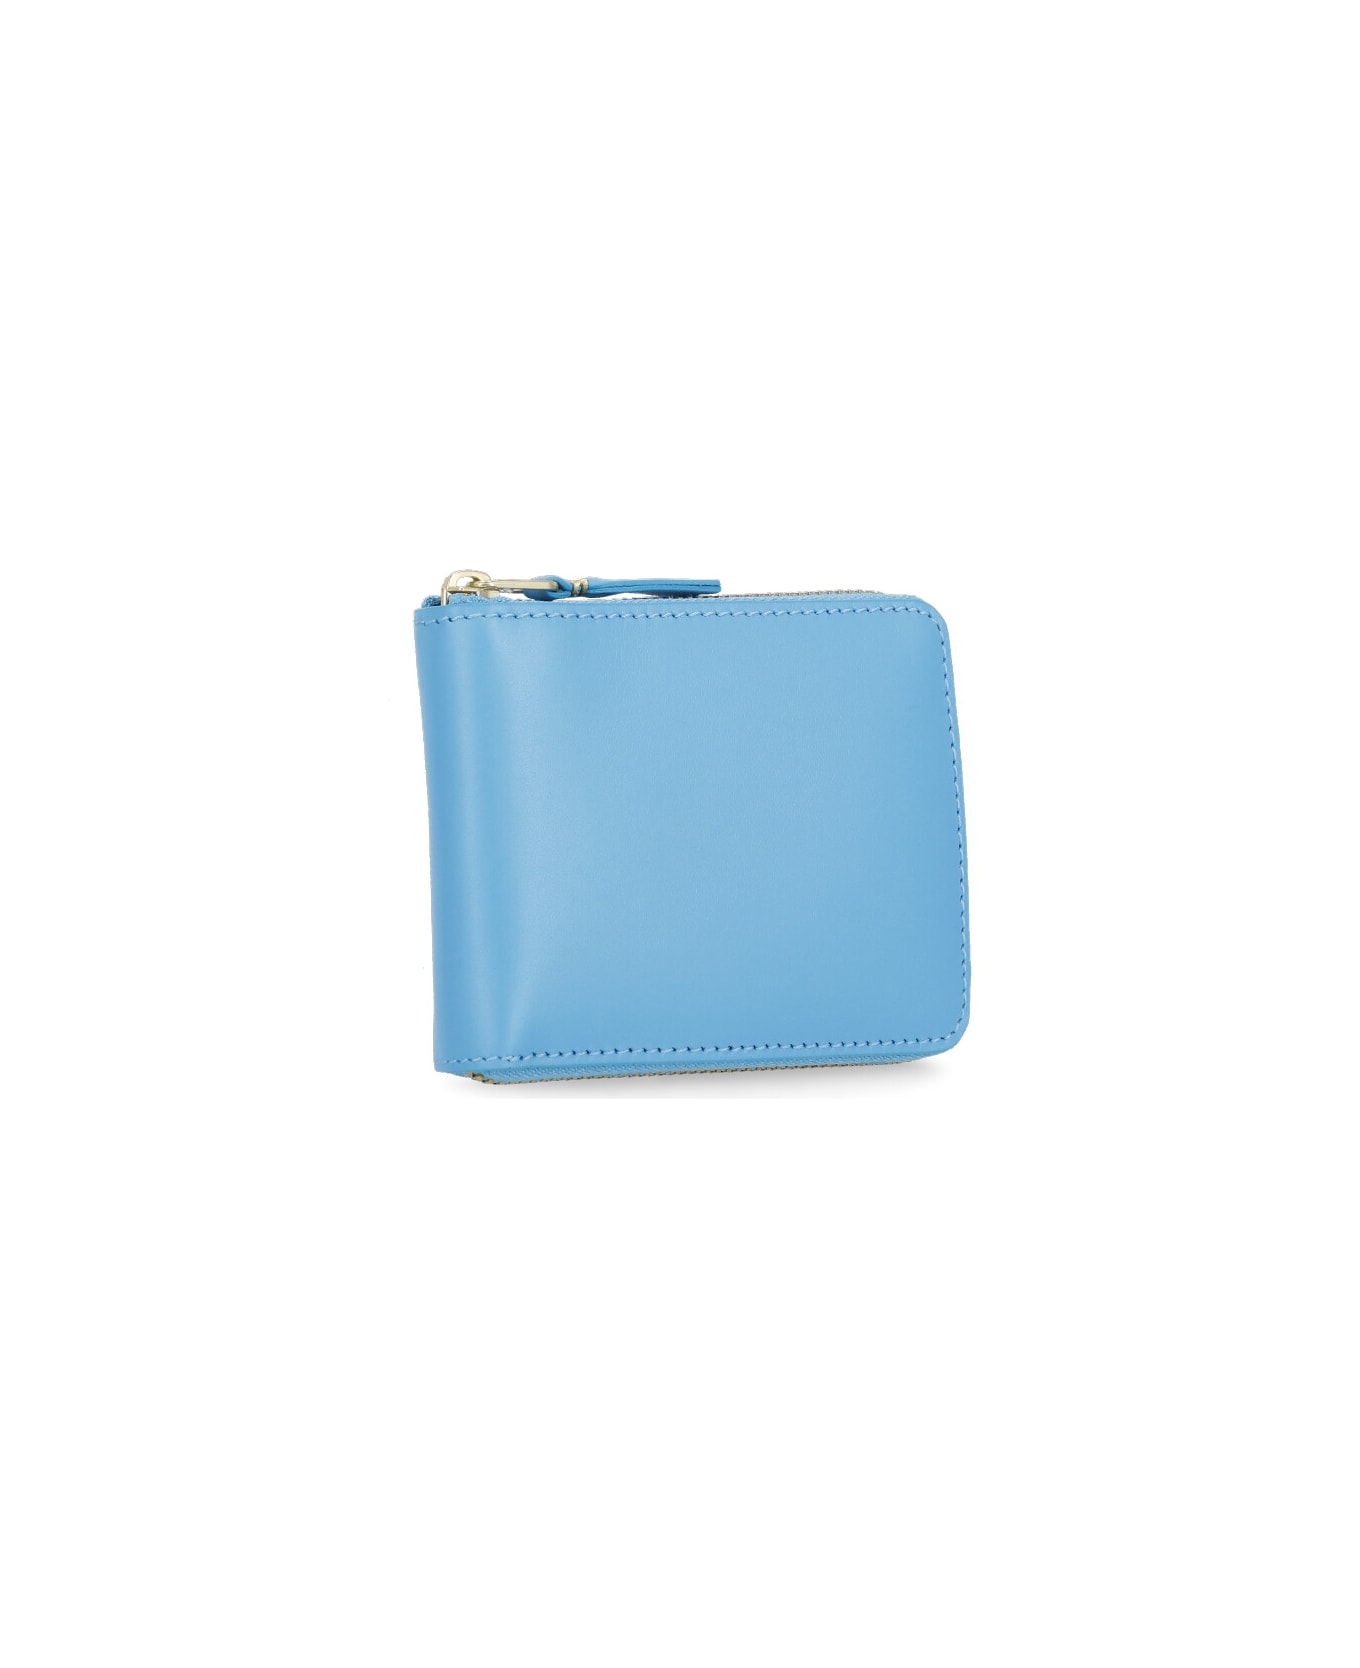 Comme des Garçons Wallet Smooth Leather Wallet - Light Blue 財布